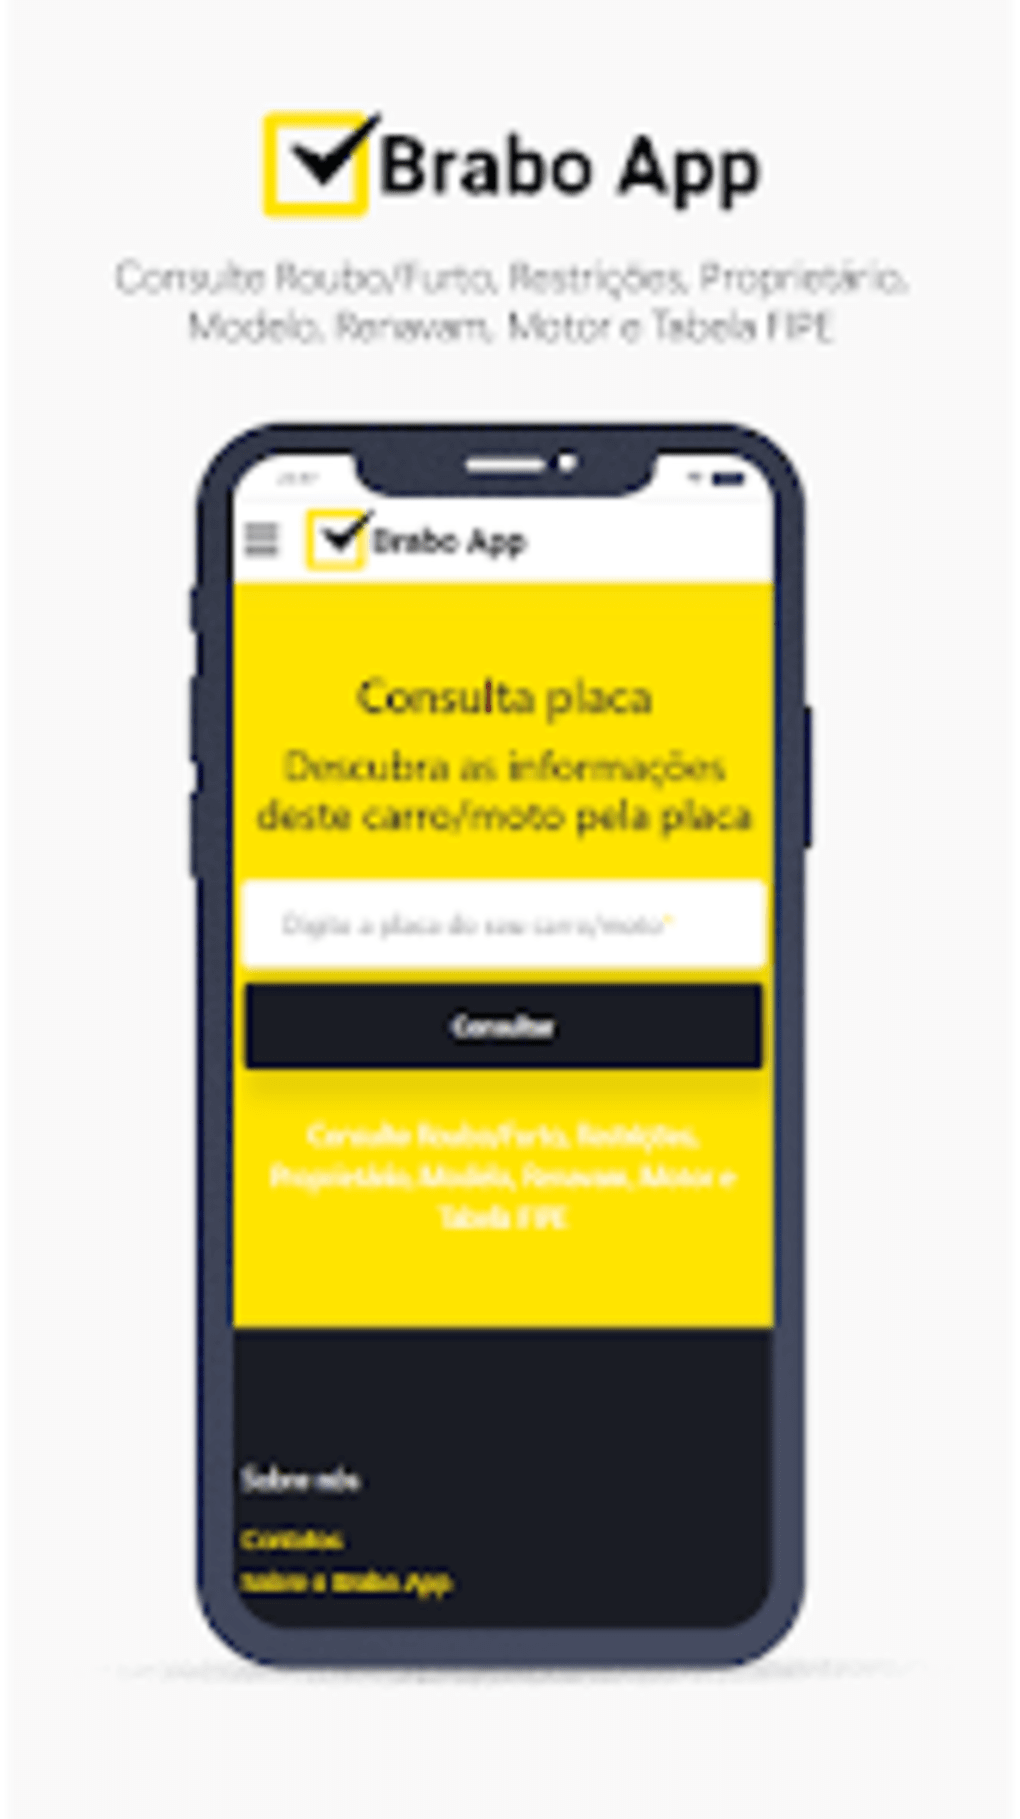 Consulta Placa Carro Fipe 2023 for Android - Free App Download